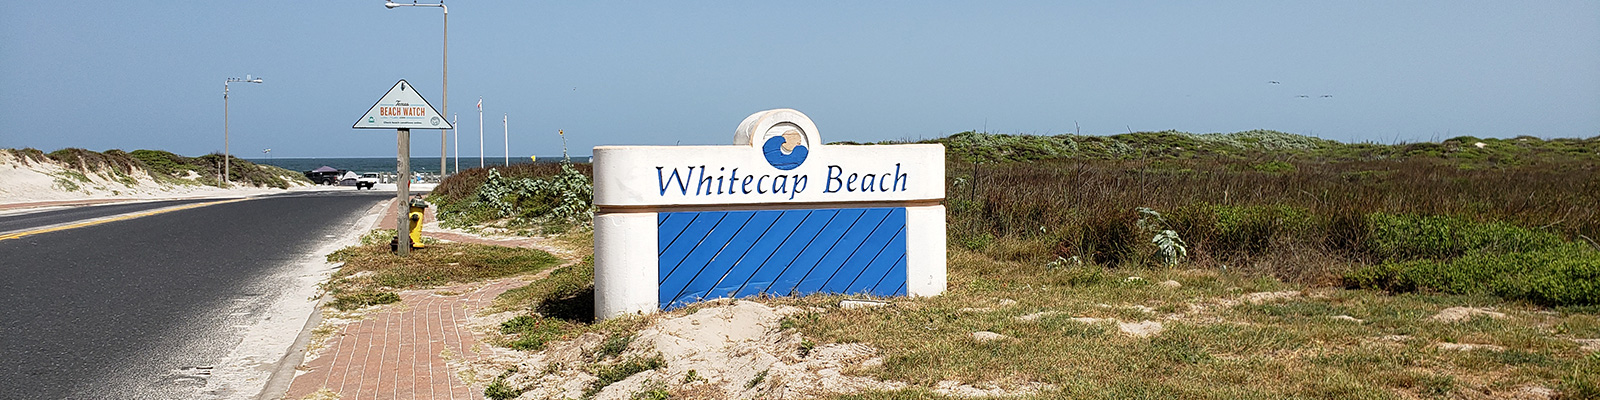 white cap beach enterance